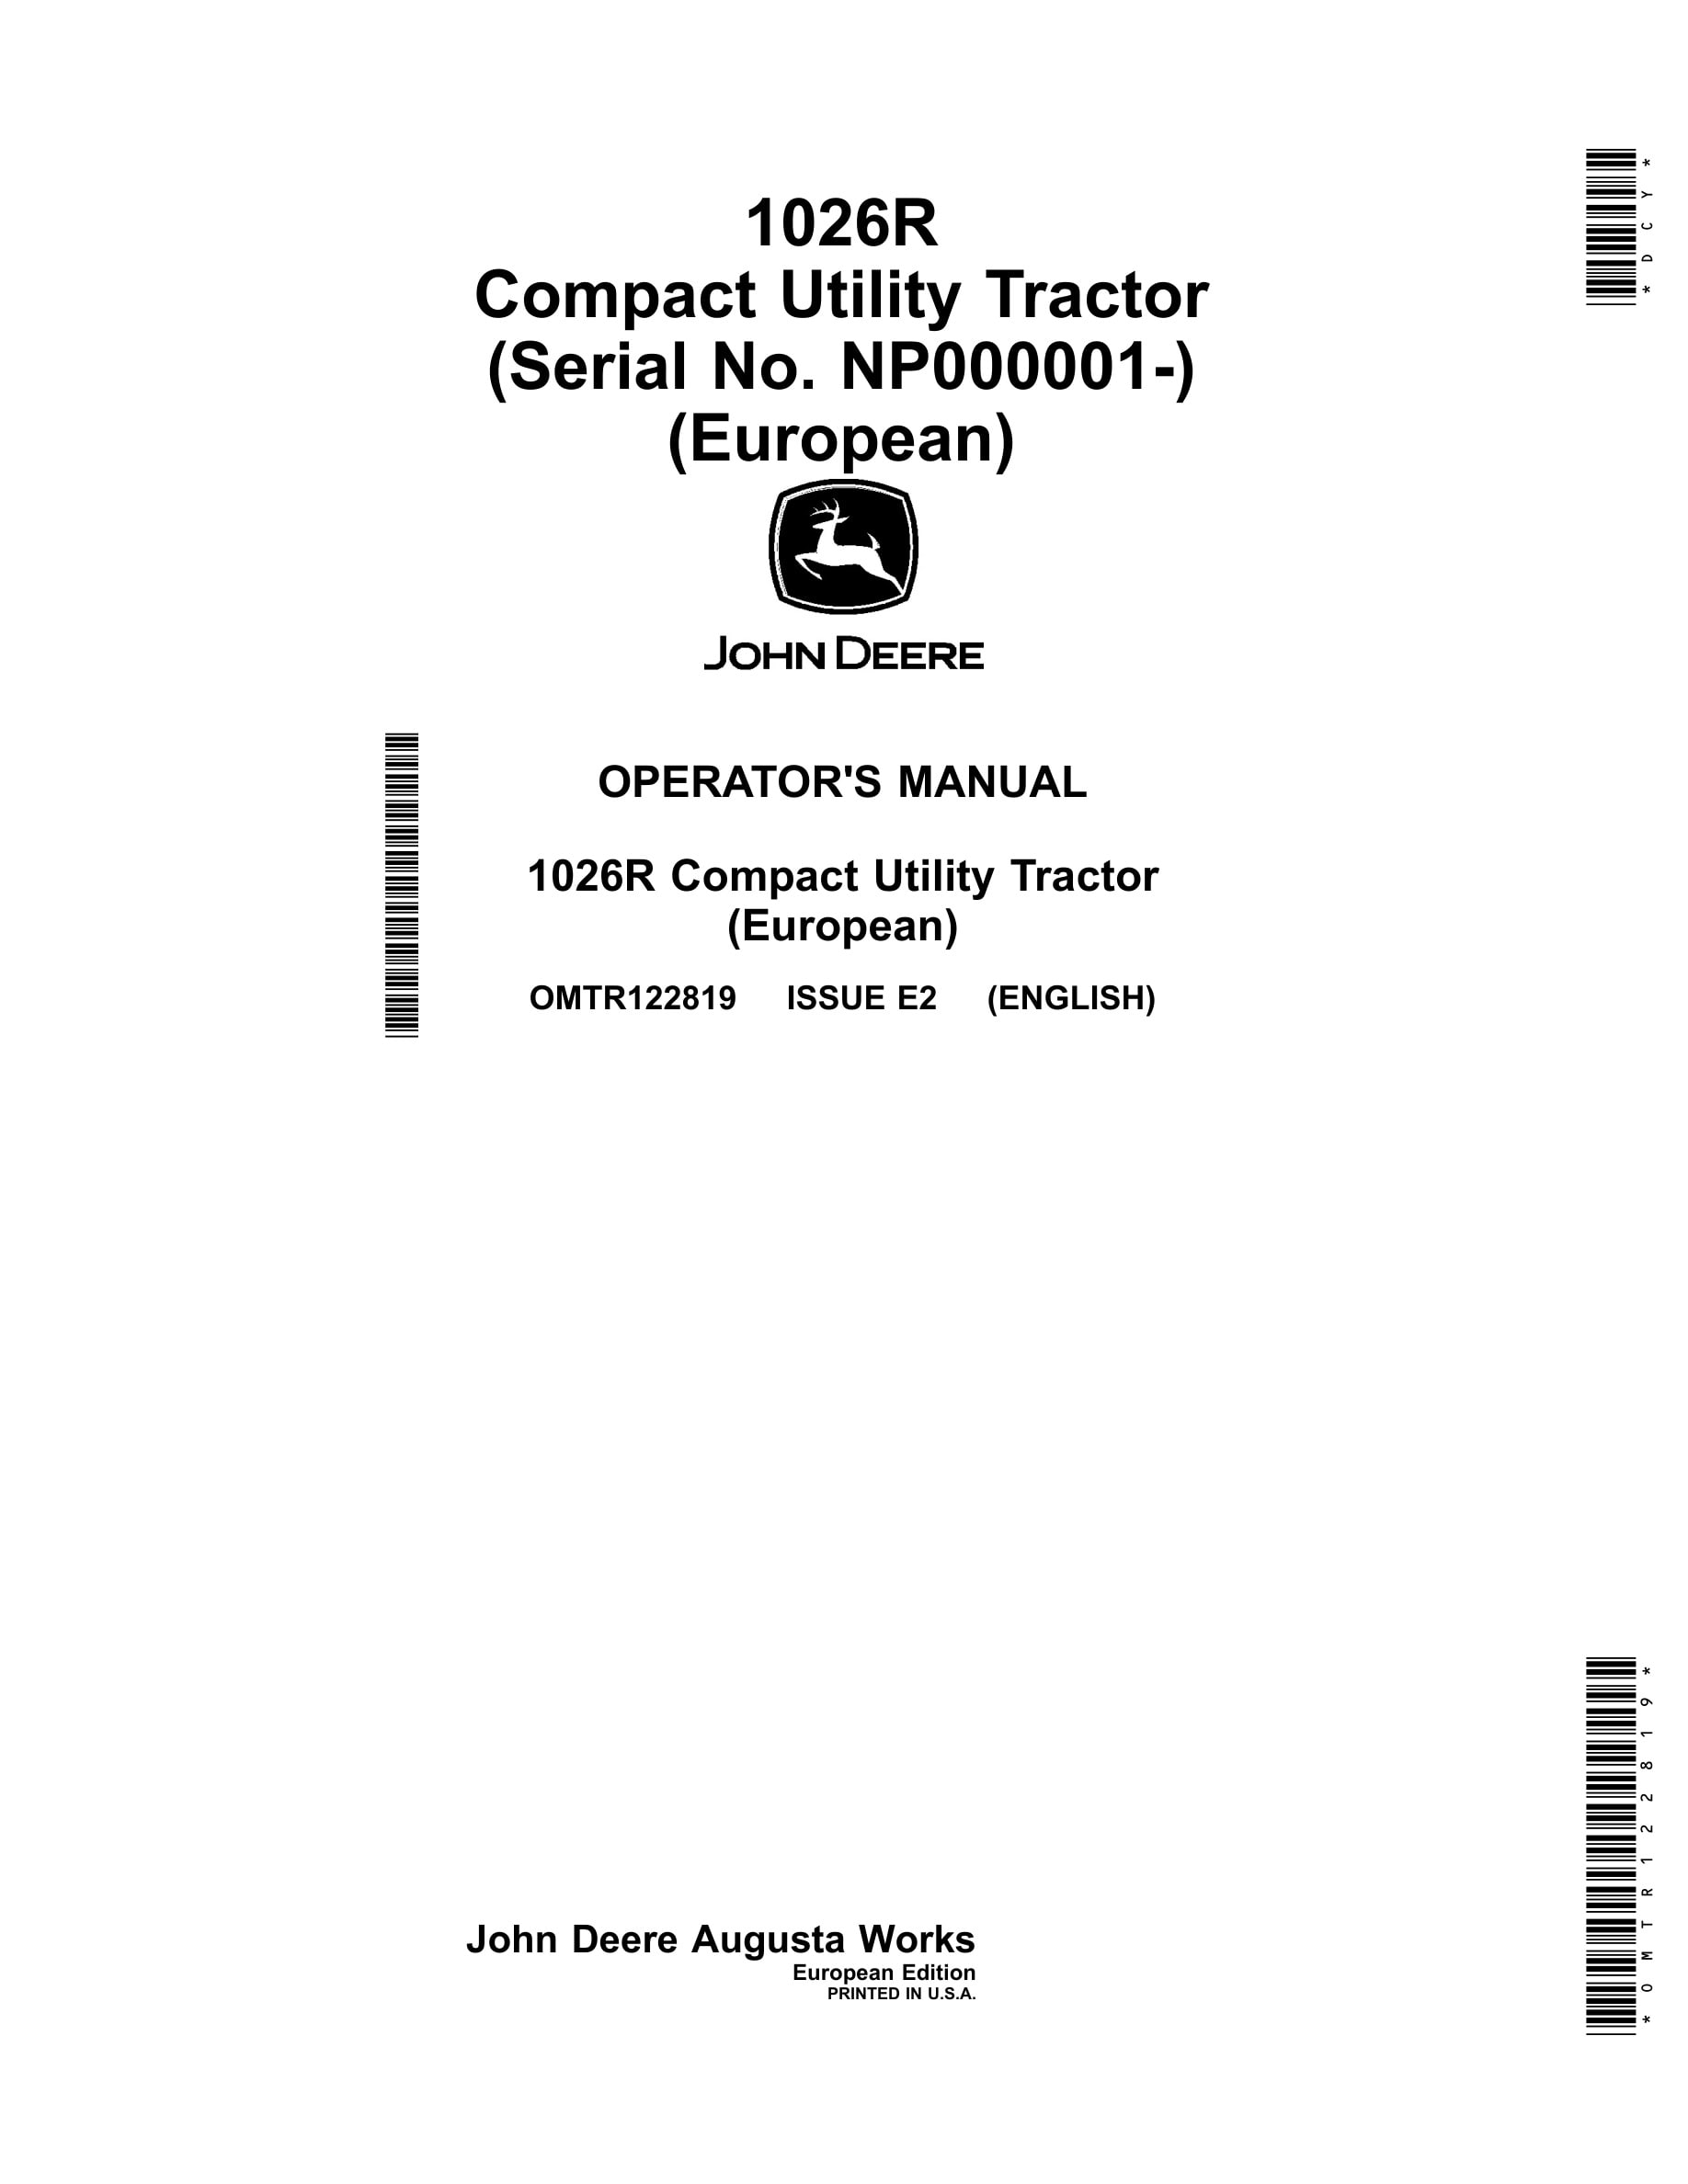 John Deere 1026r Compact Utility Tractors Operator Manual OMTR122819-1